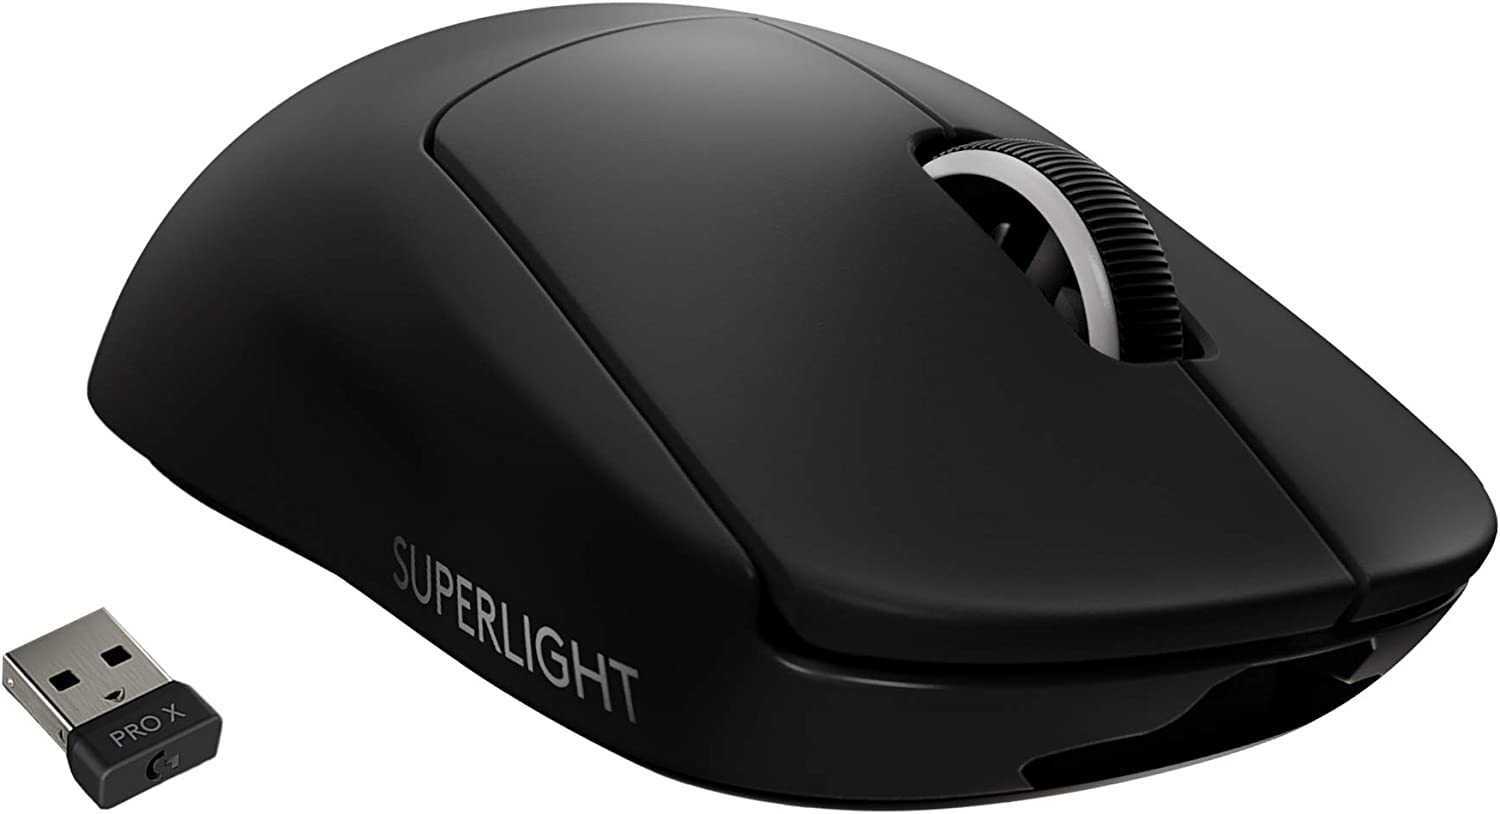 Best overall drag clicking mouse - Logitech G PRO X Superlight